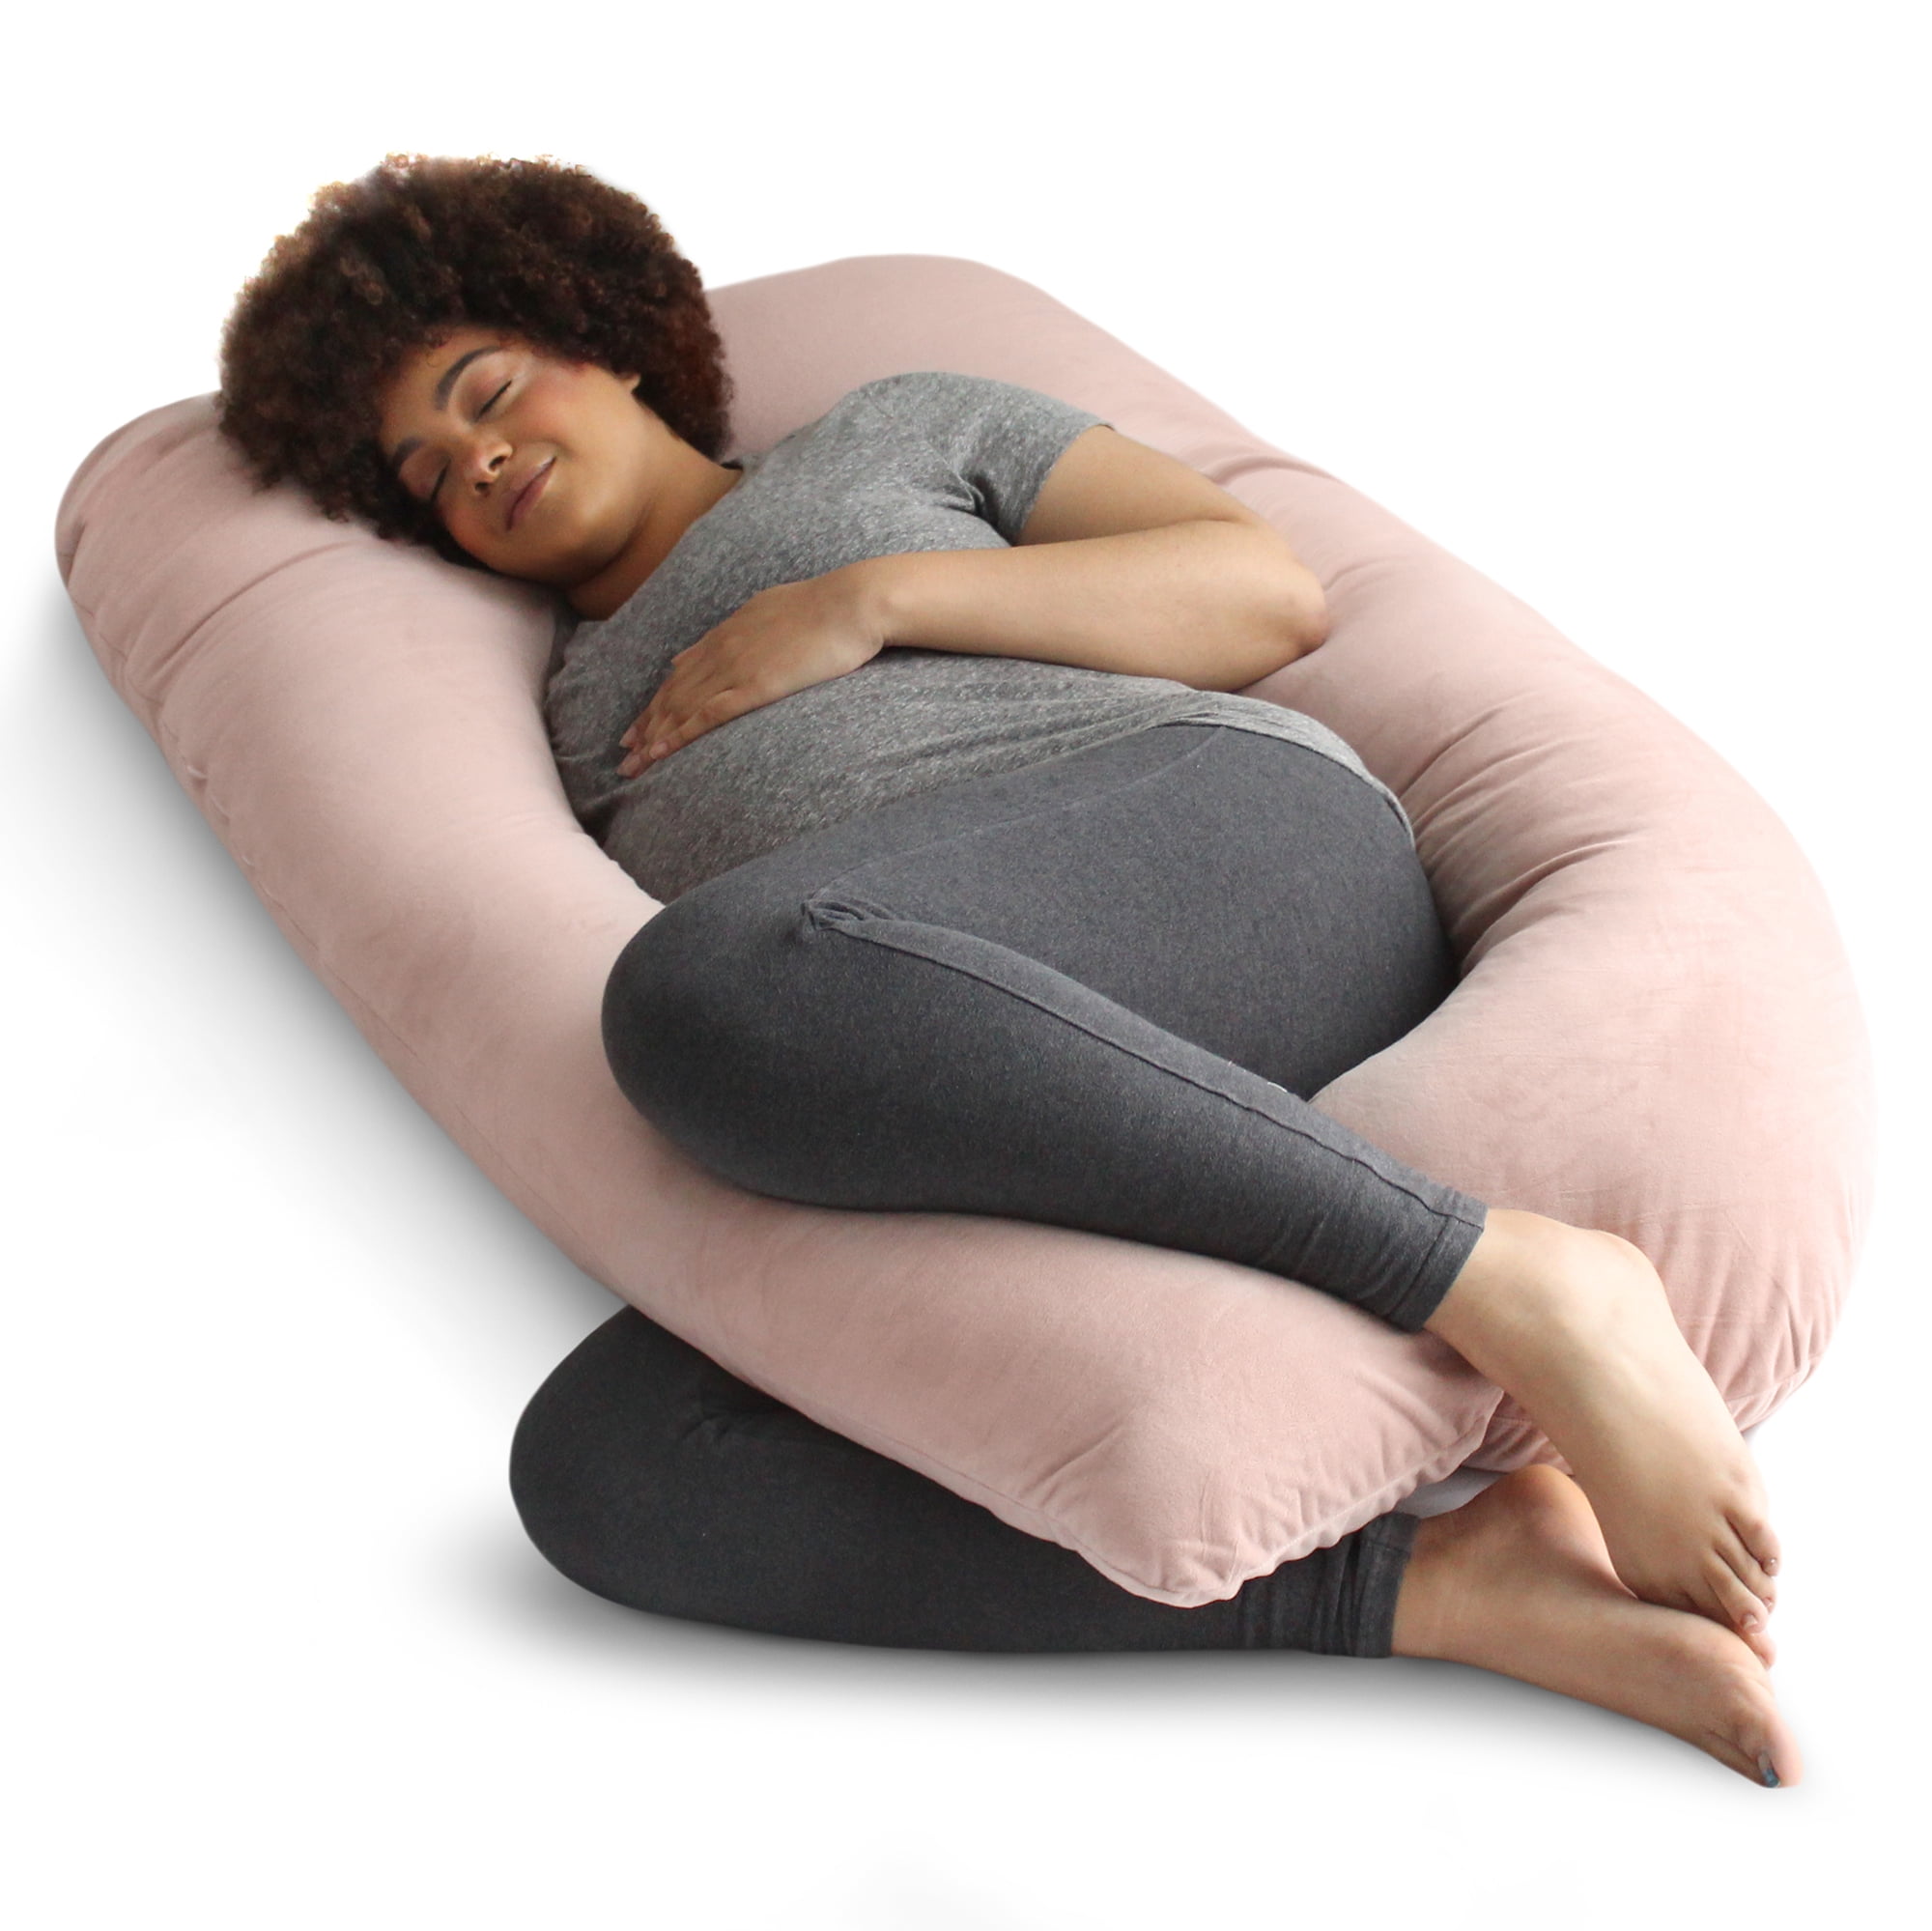 body pillows for pregnant ladies